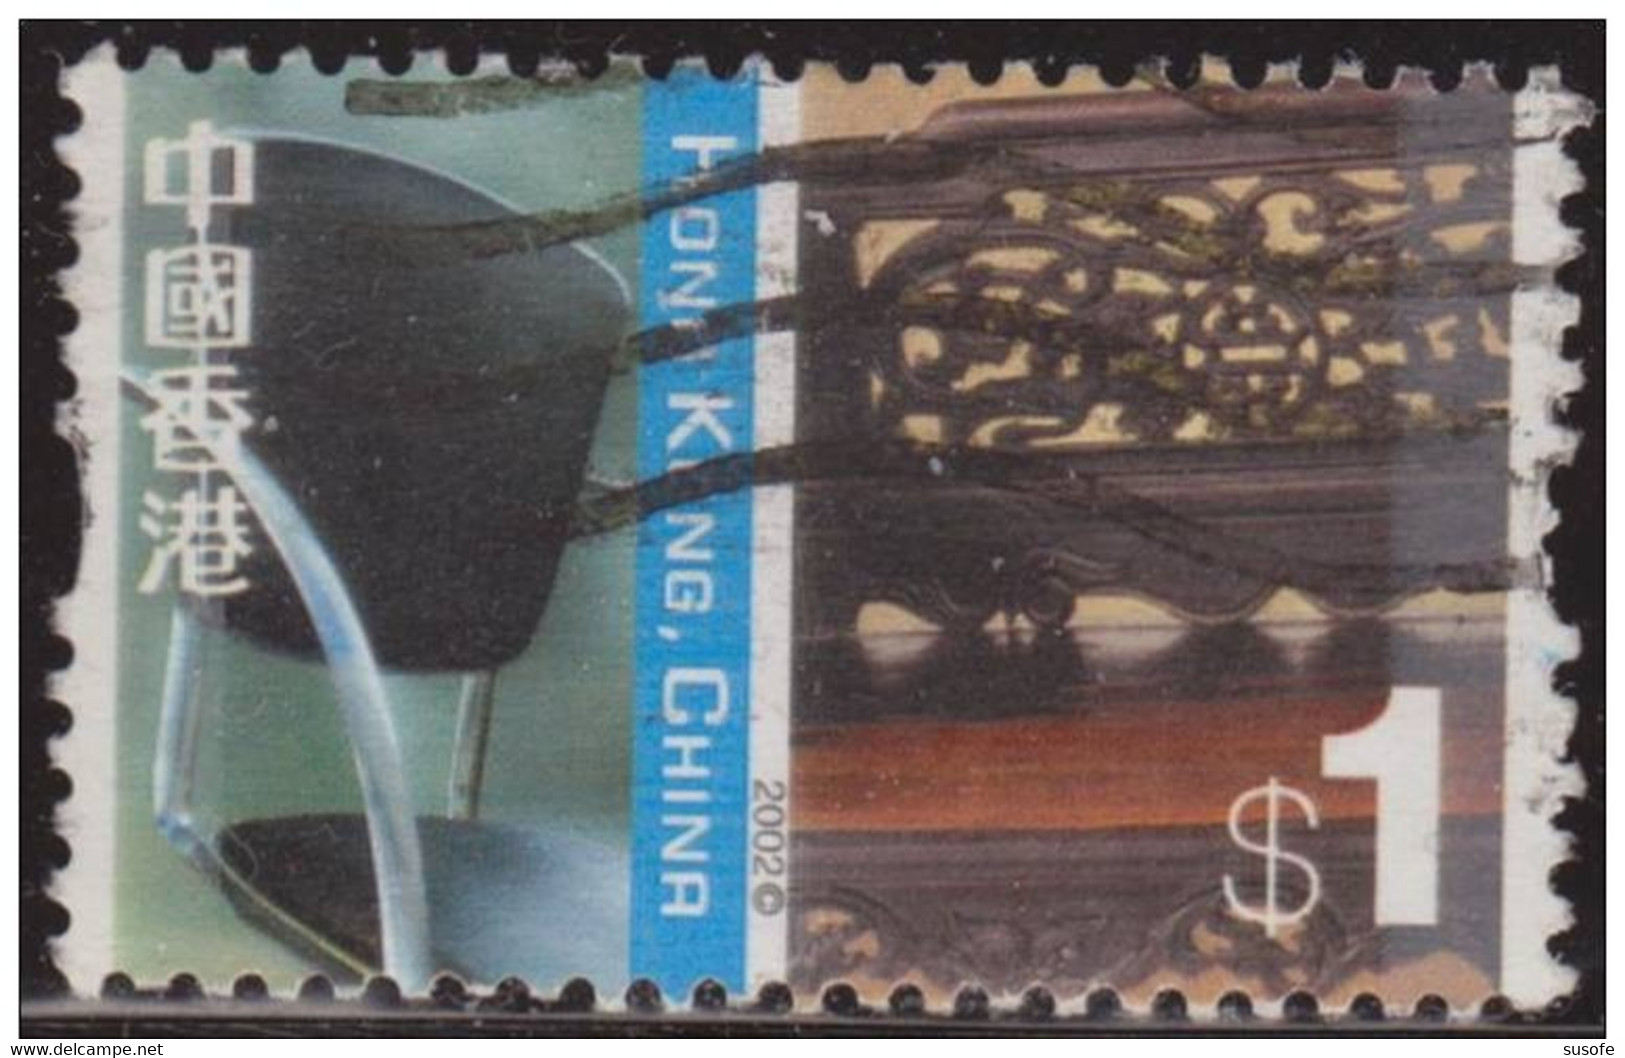 Hong Kong China 2002 Scott 1001 Sello º Cultural Diversity Silla China Y Cama Luohan Michel 1058 Yvert 1030 Stamps - Oblitérés